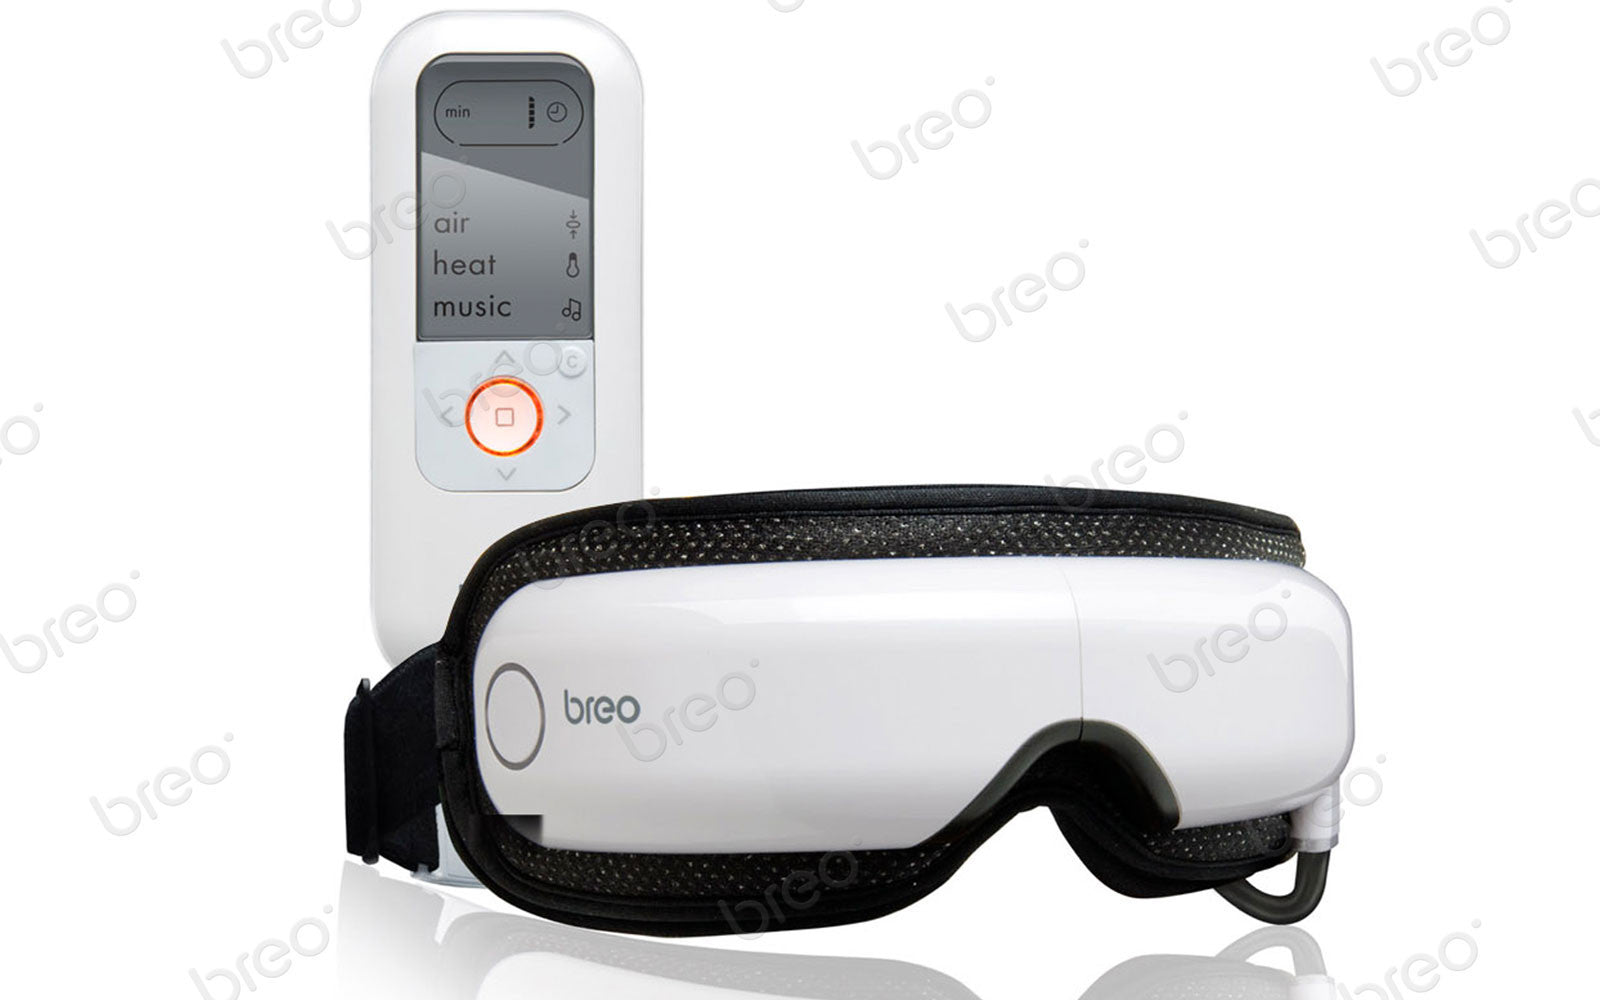 Breo iSee370 Eye Massager - OBM Distribution, Inc.